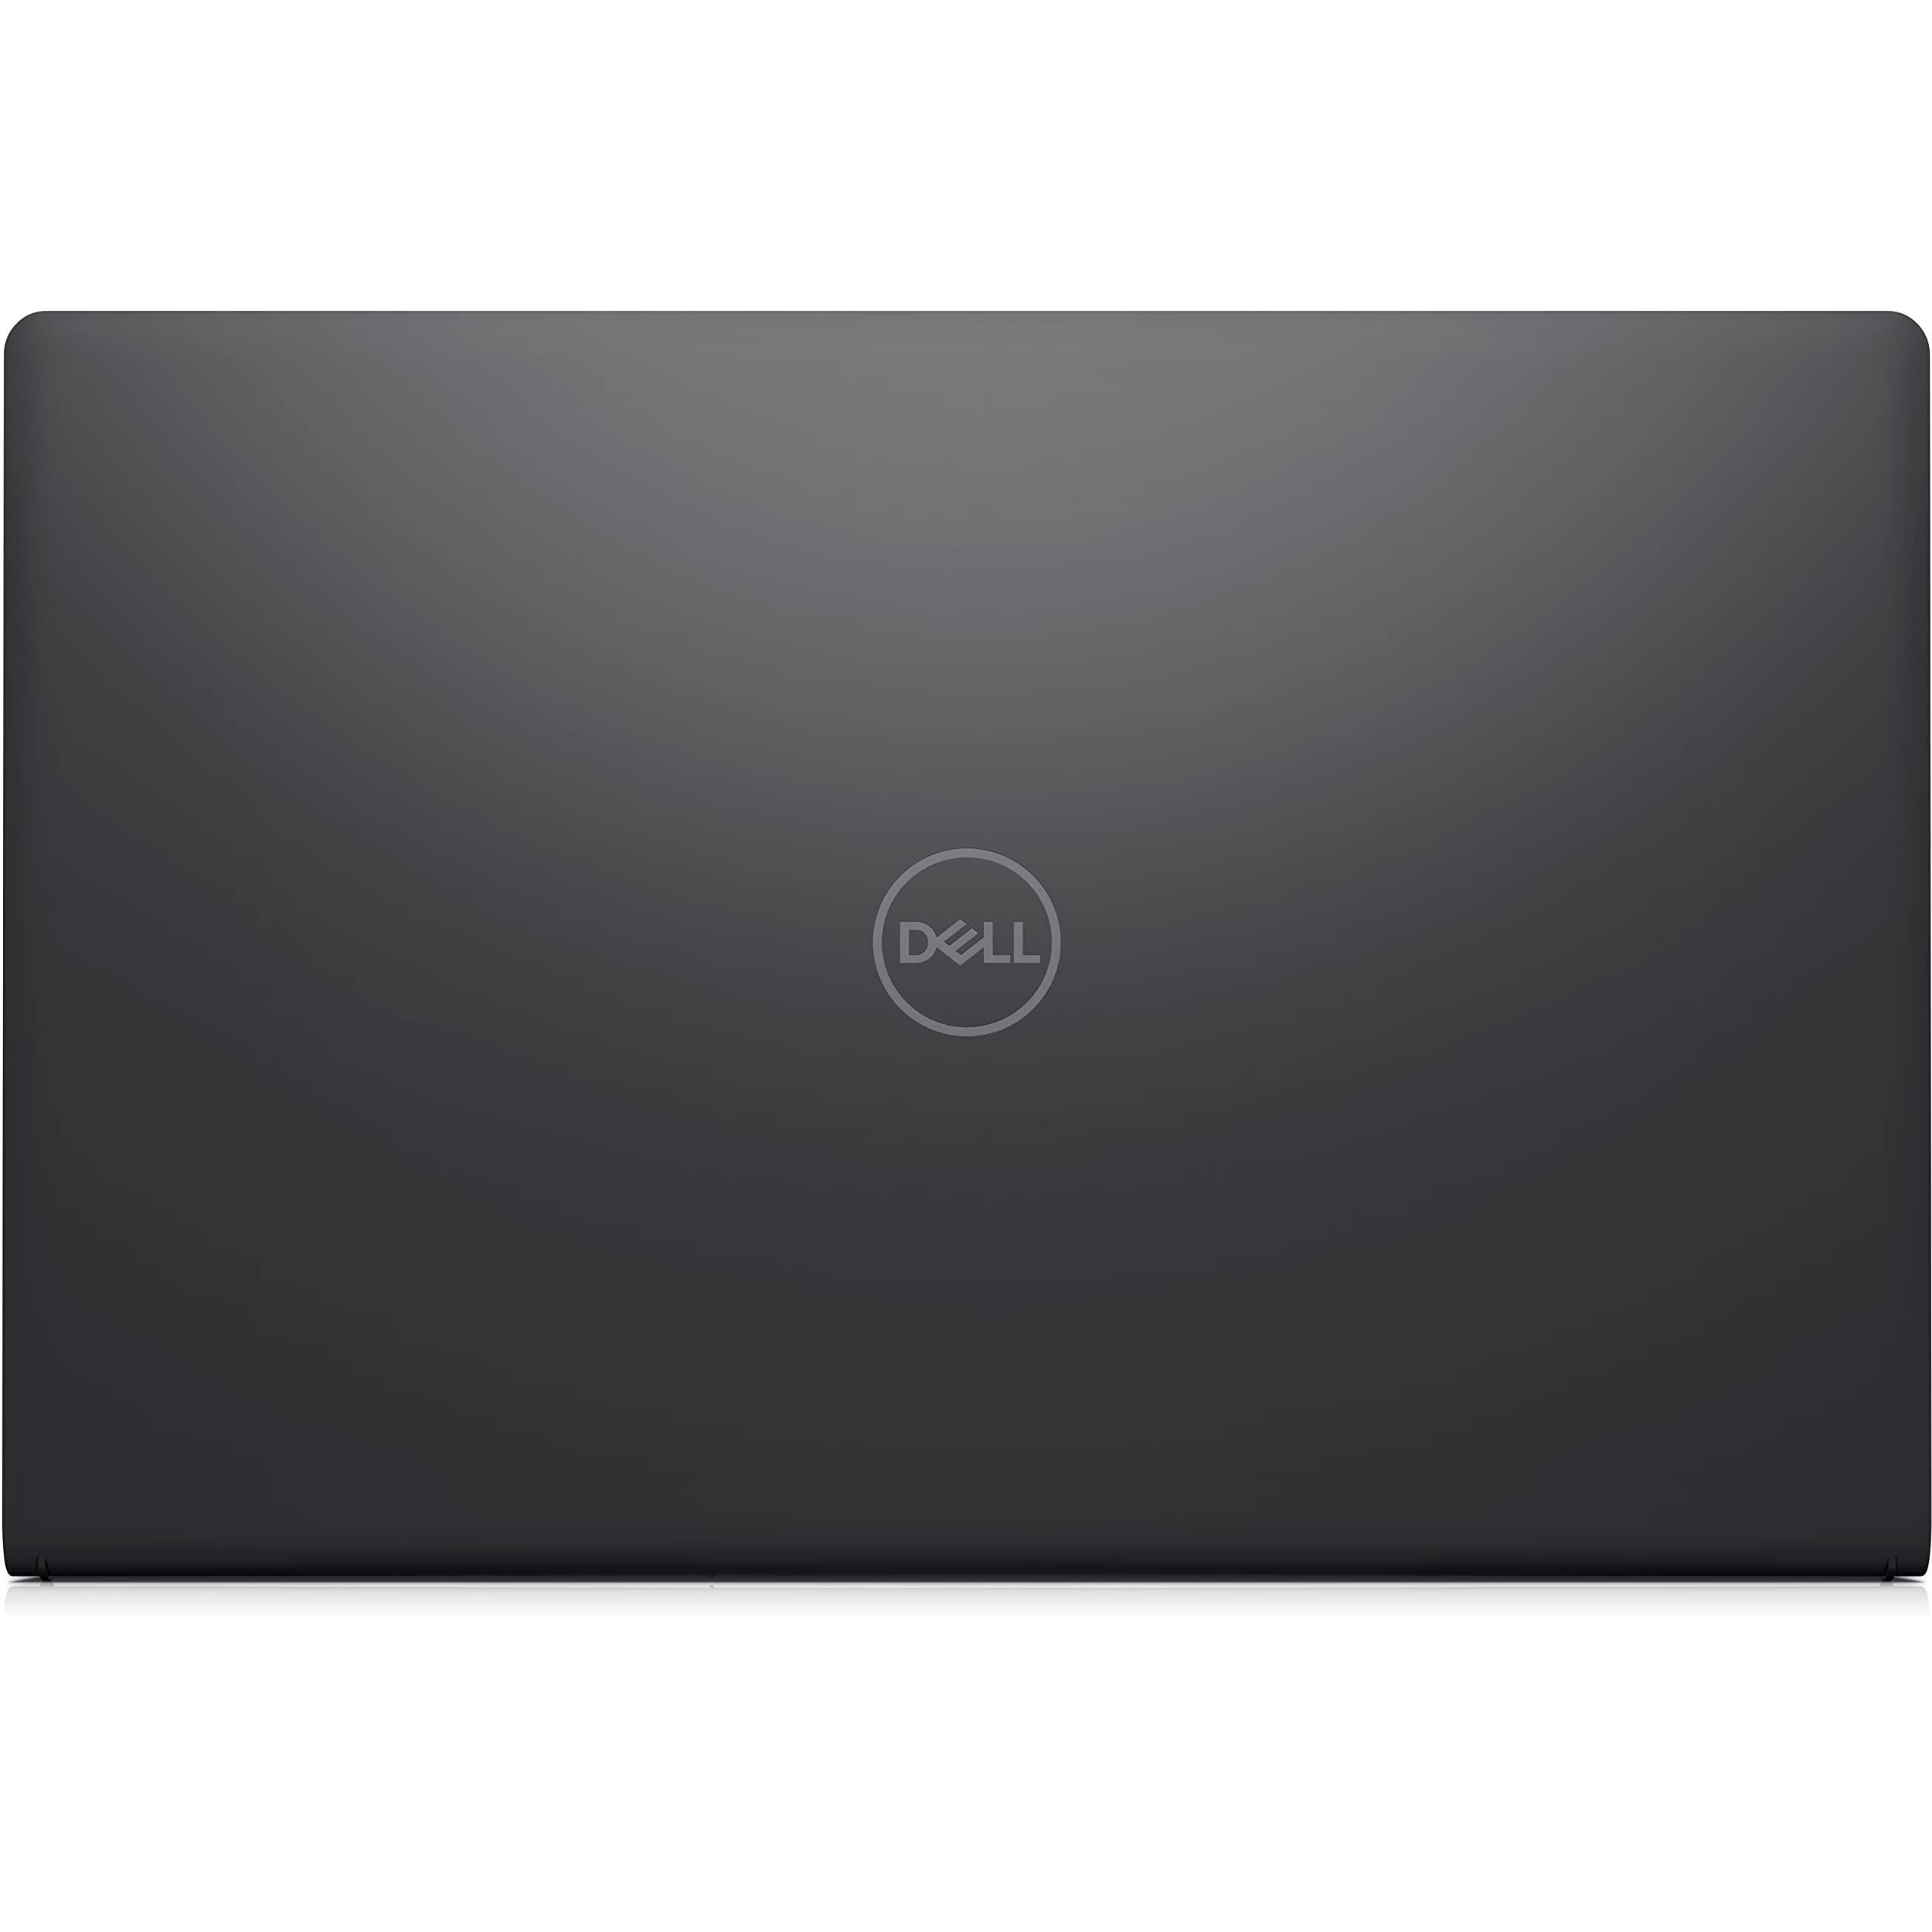 Dell Inspiron 15 3000 3520 15.6" FHD Touchscreen Business Laptop Computer, Intel Core i5-1135G7 (Beat i7-1065G7), 16GB DDR4 RAM, 512GB PCIe SSD, 802.11AC WiFi, Bluetooth, Windows 11 Pro